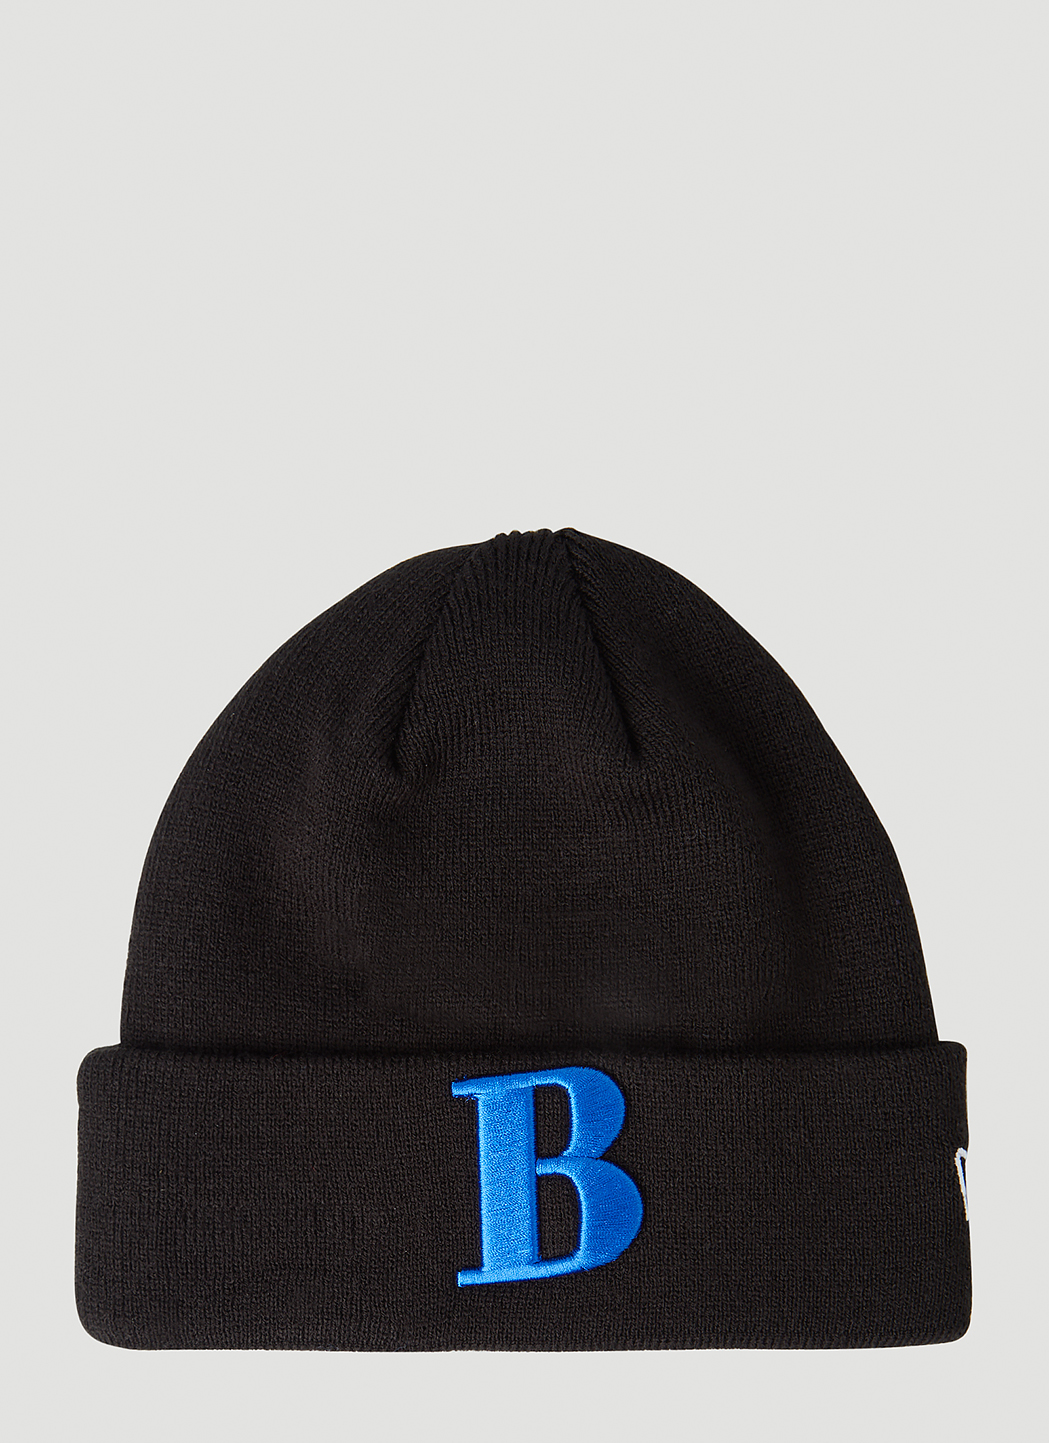 Better Gift Shop x New Era B Cuff Beanie Hat